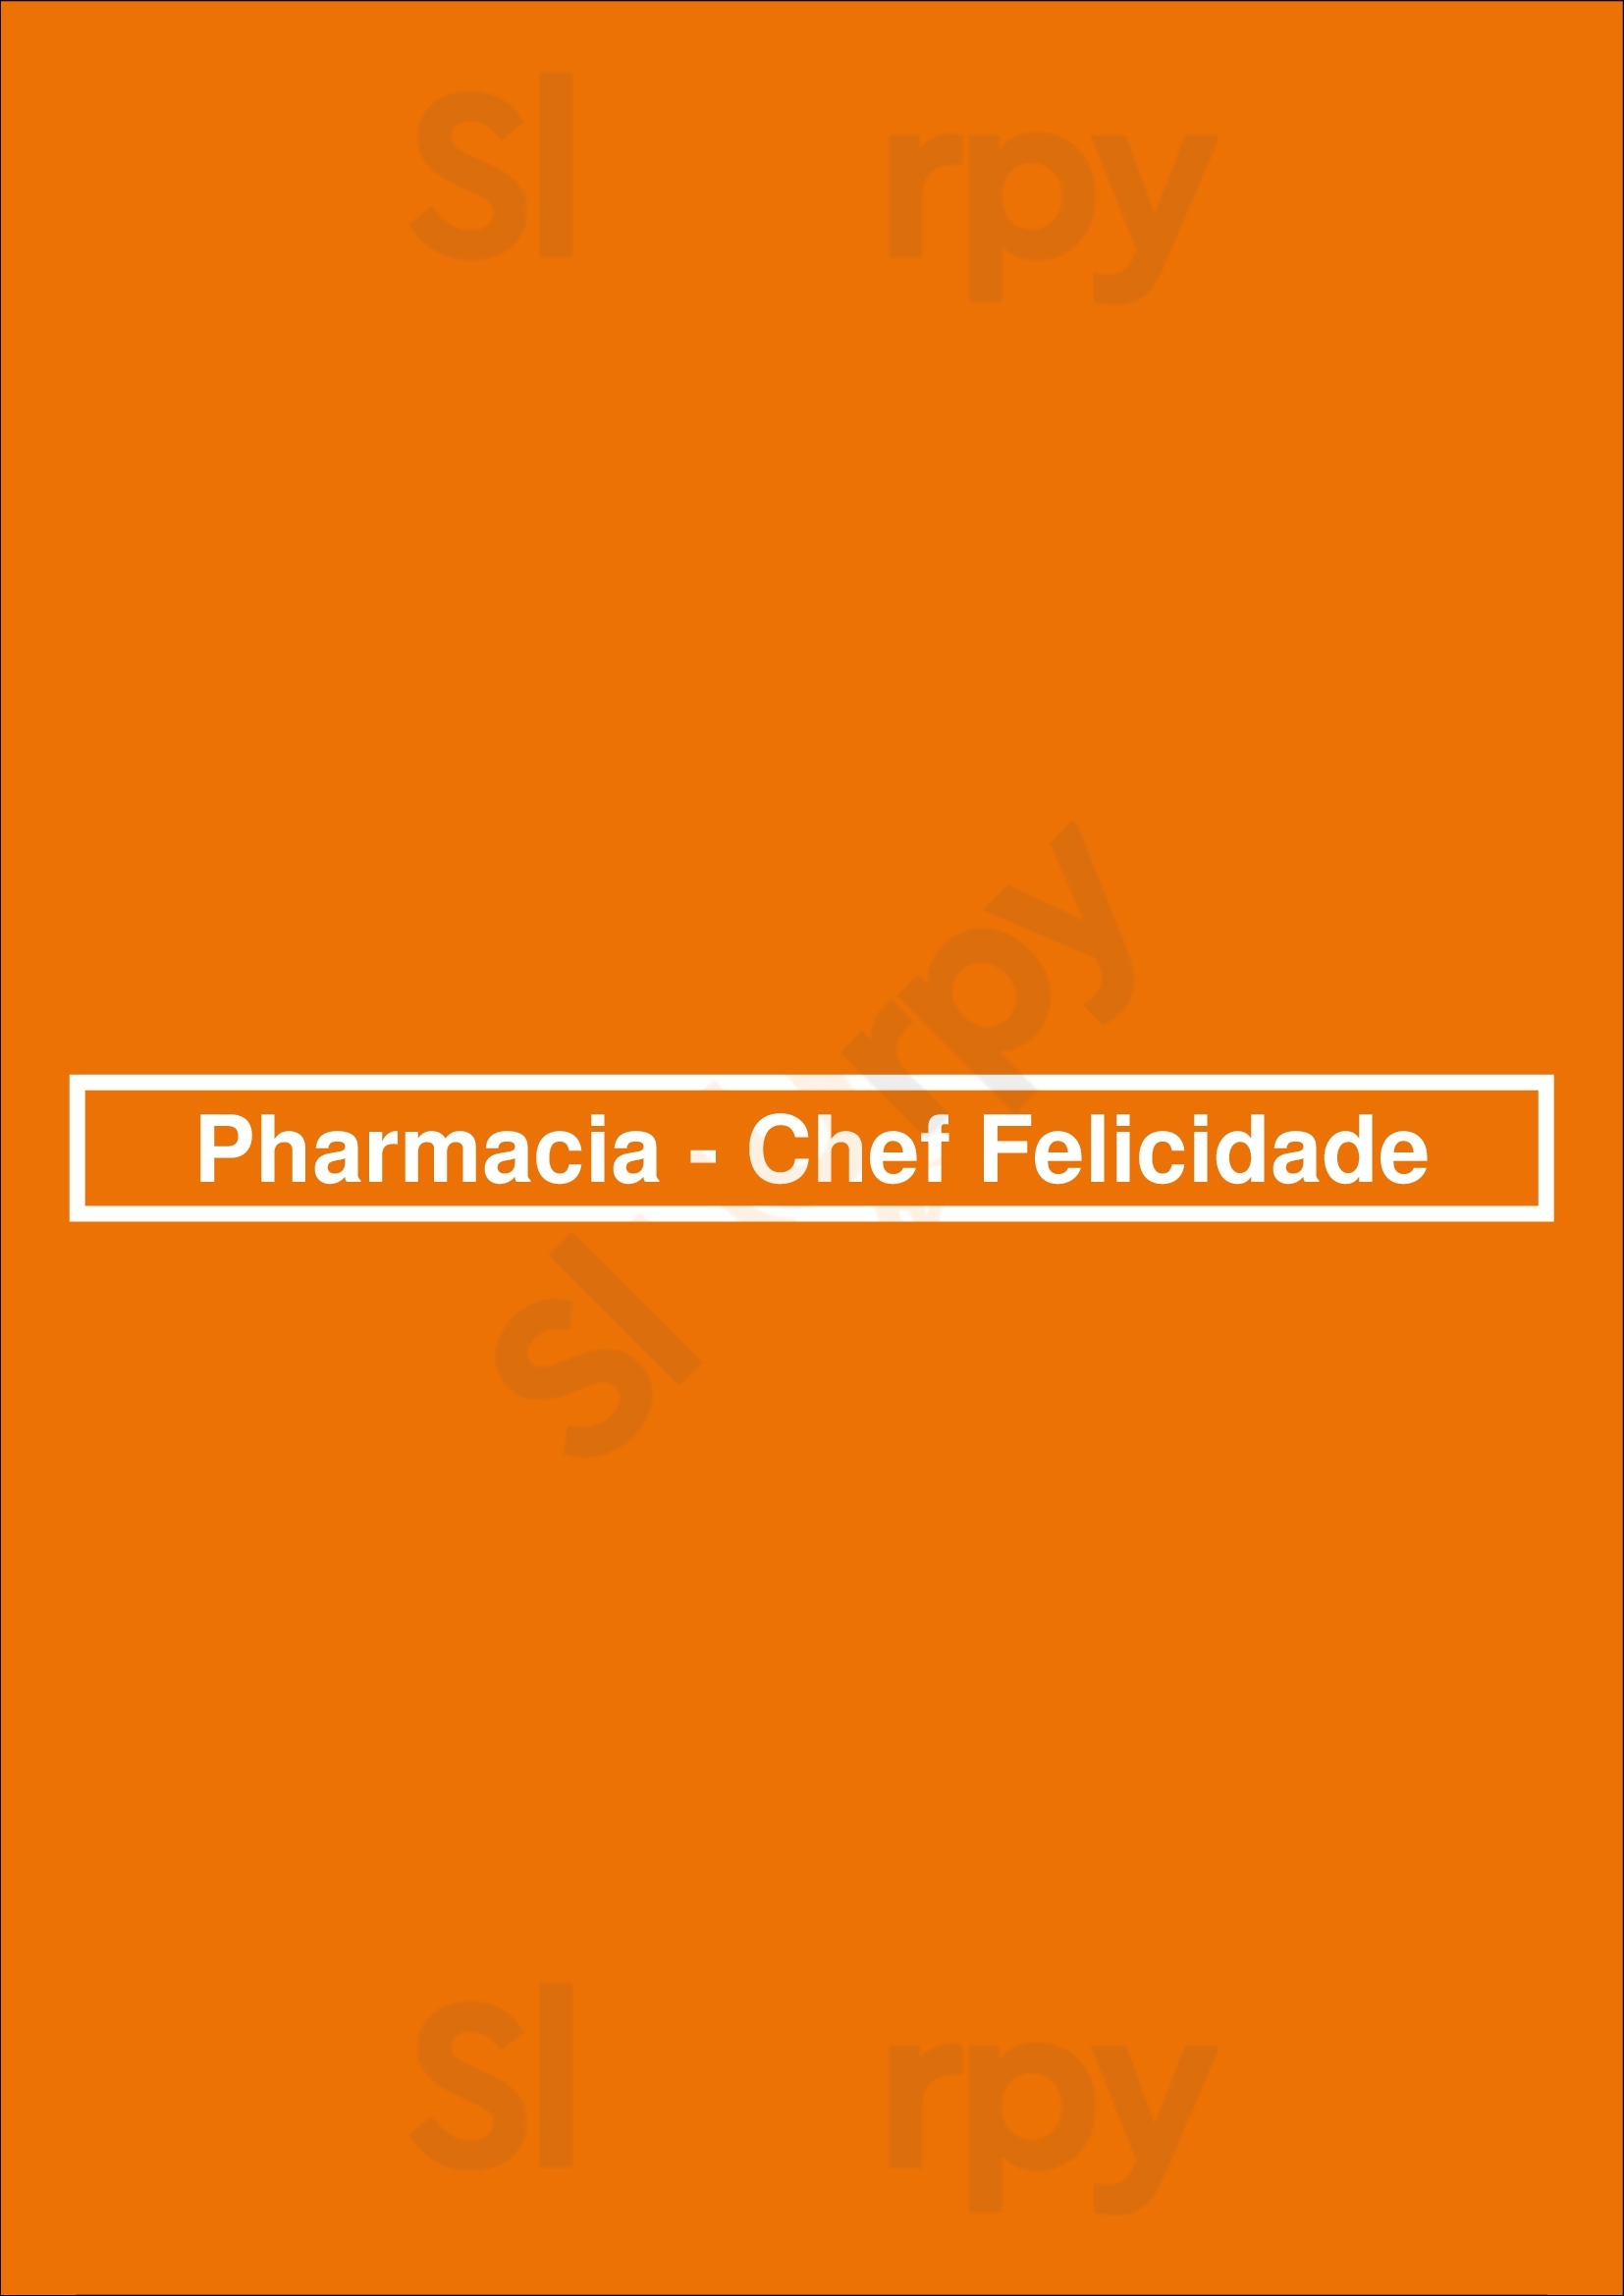 Pharmacia - Chef Felicidade Lisboa Menu - 1